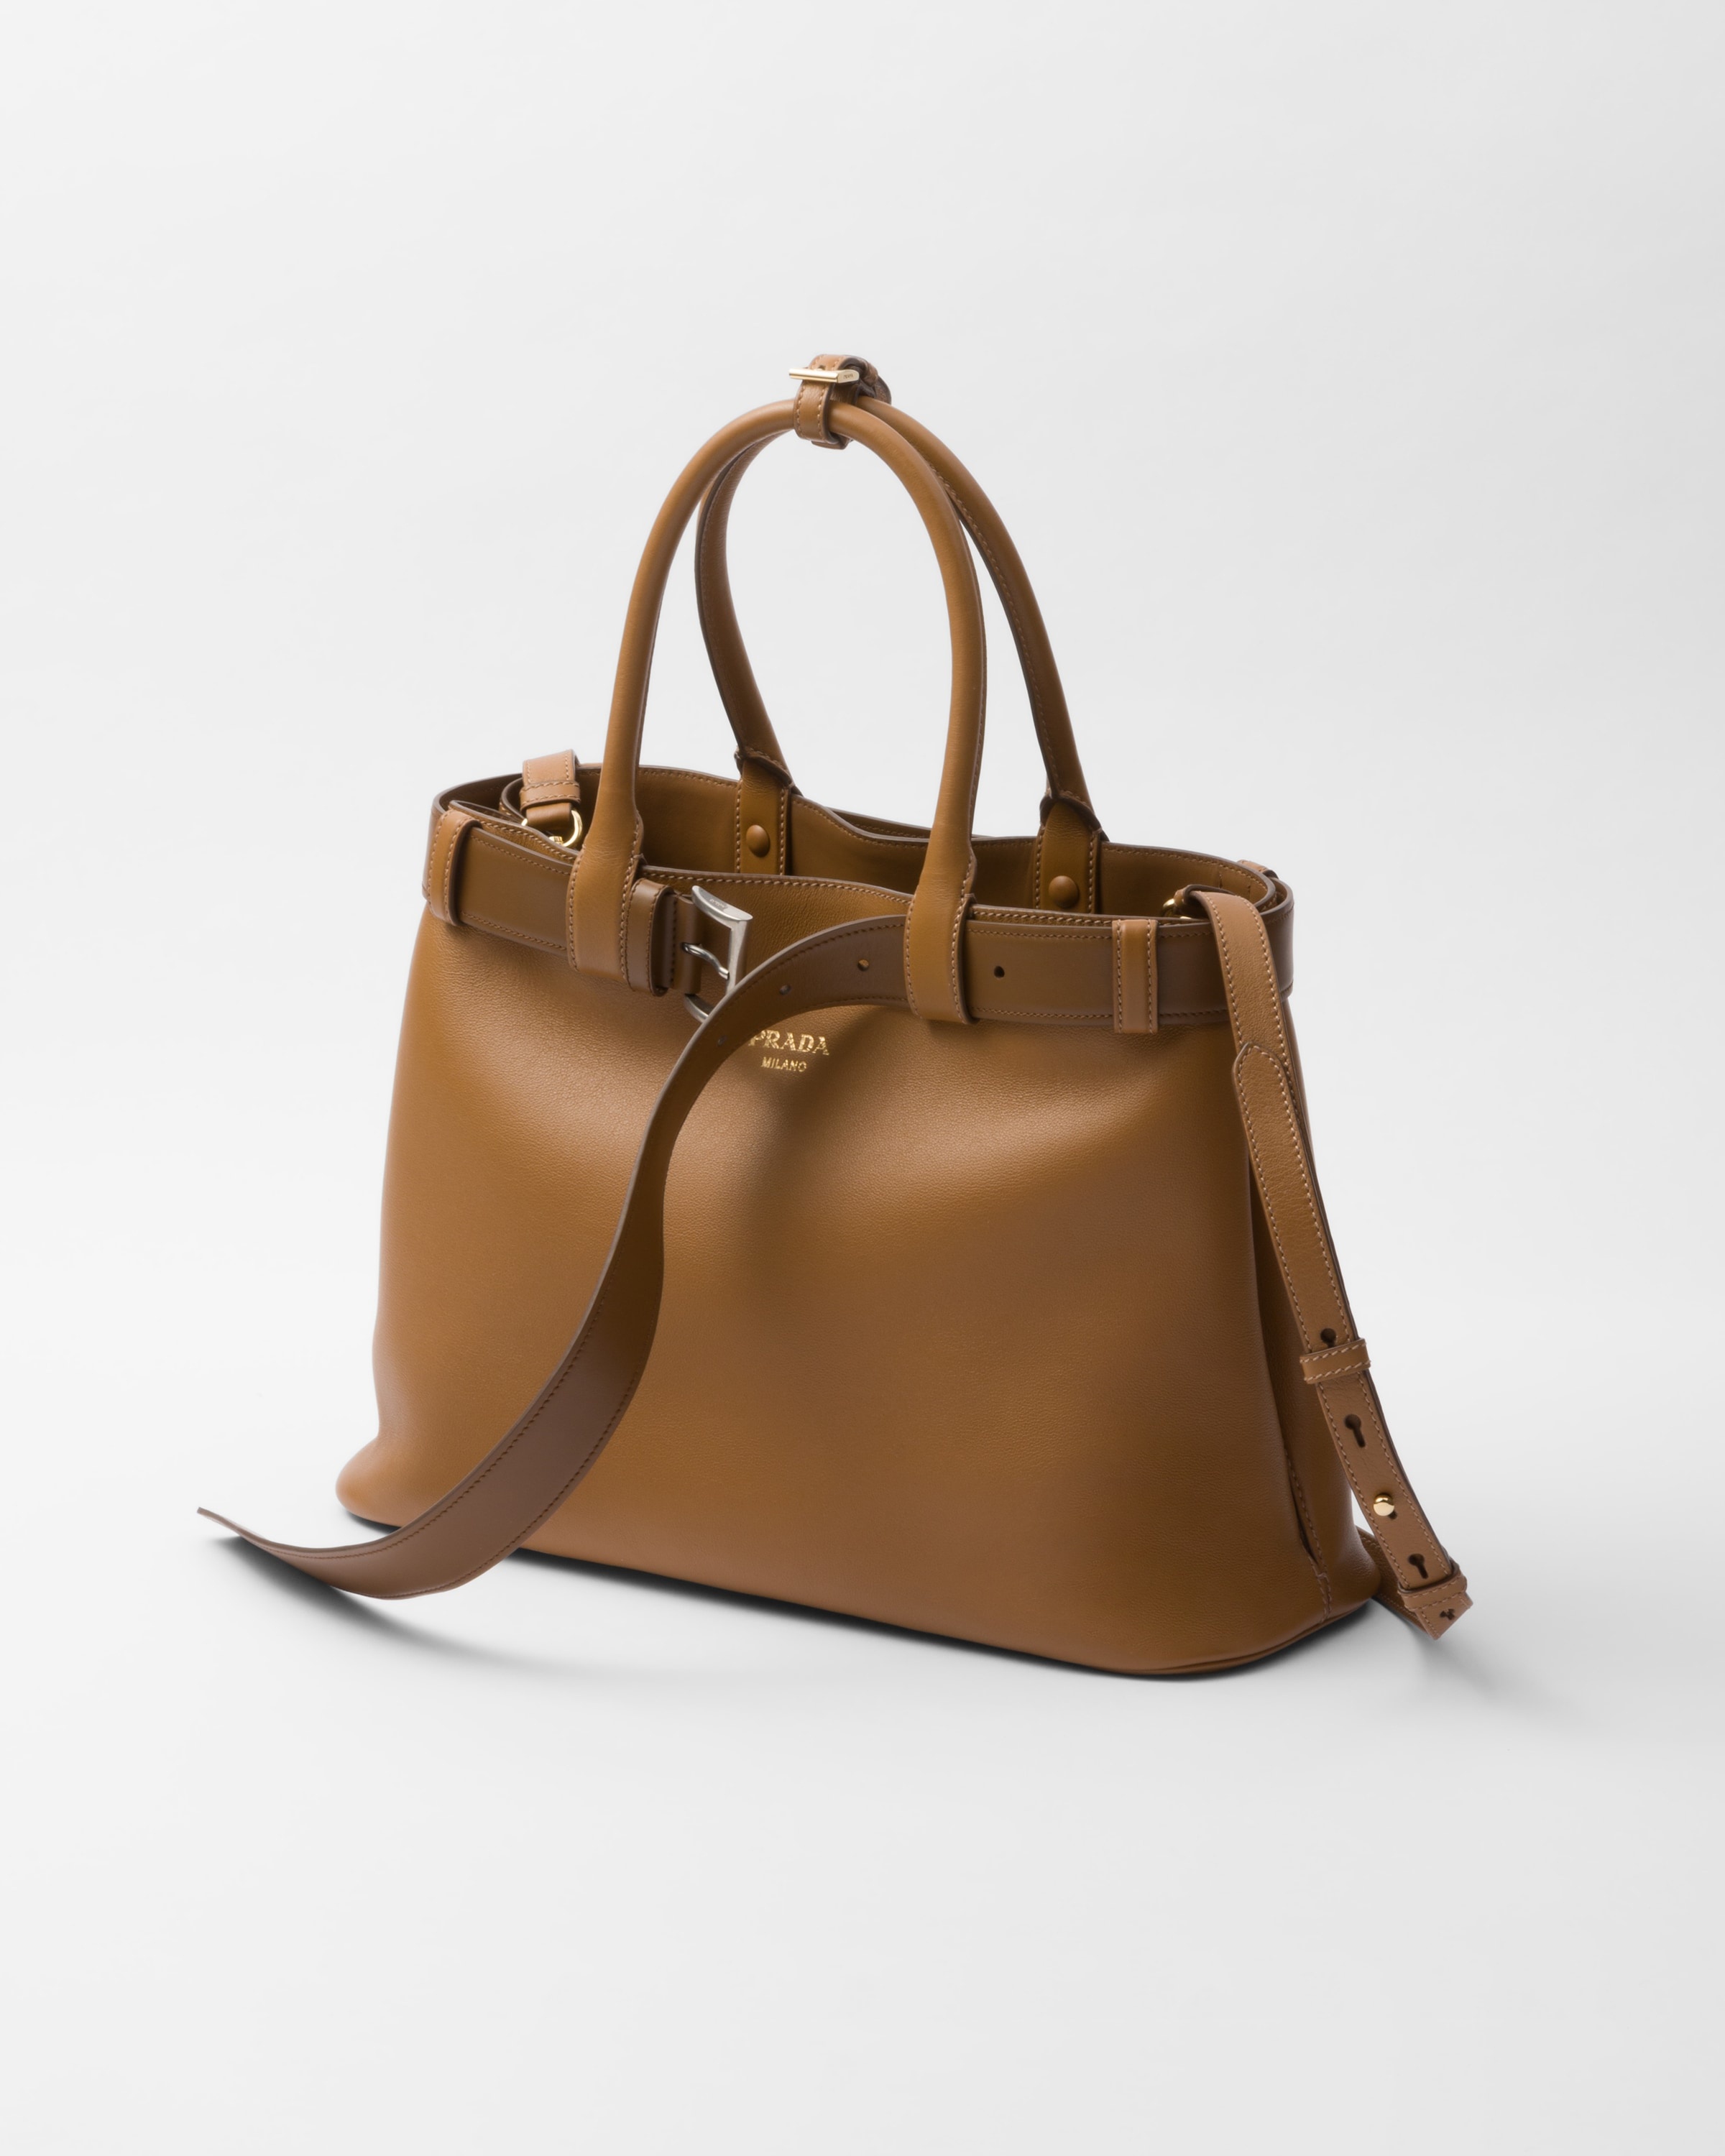 Prada Buckle large leather handbag with belt - 3